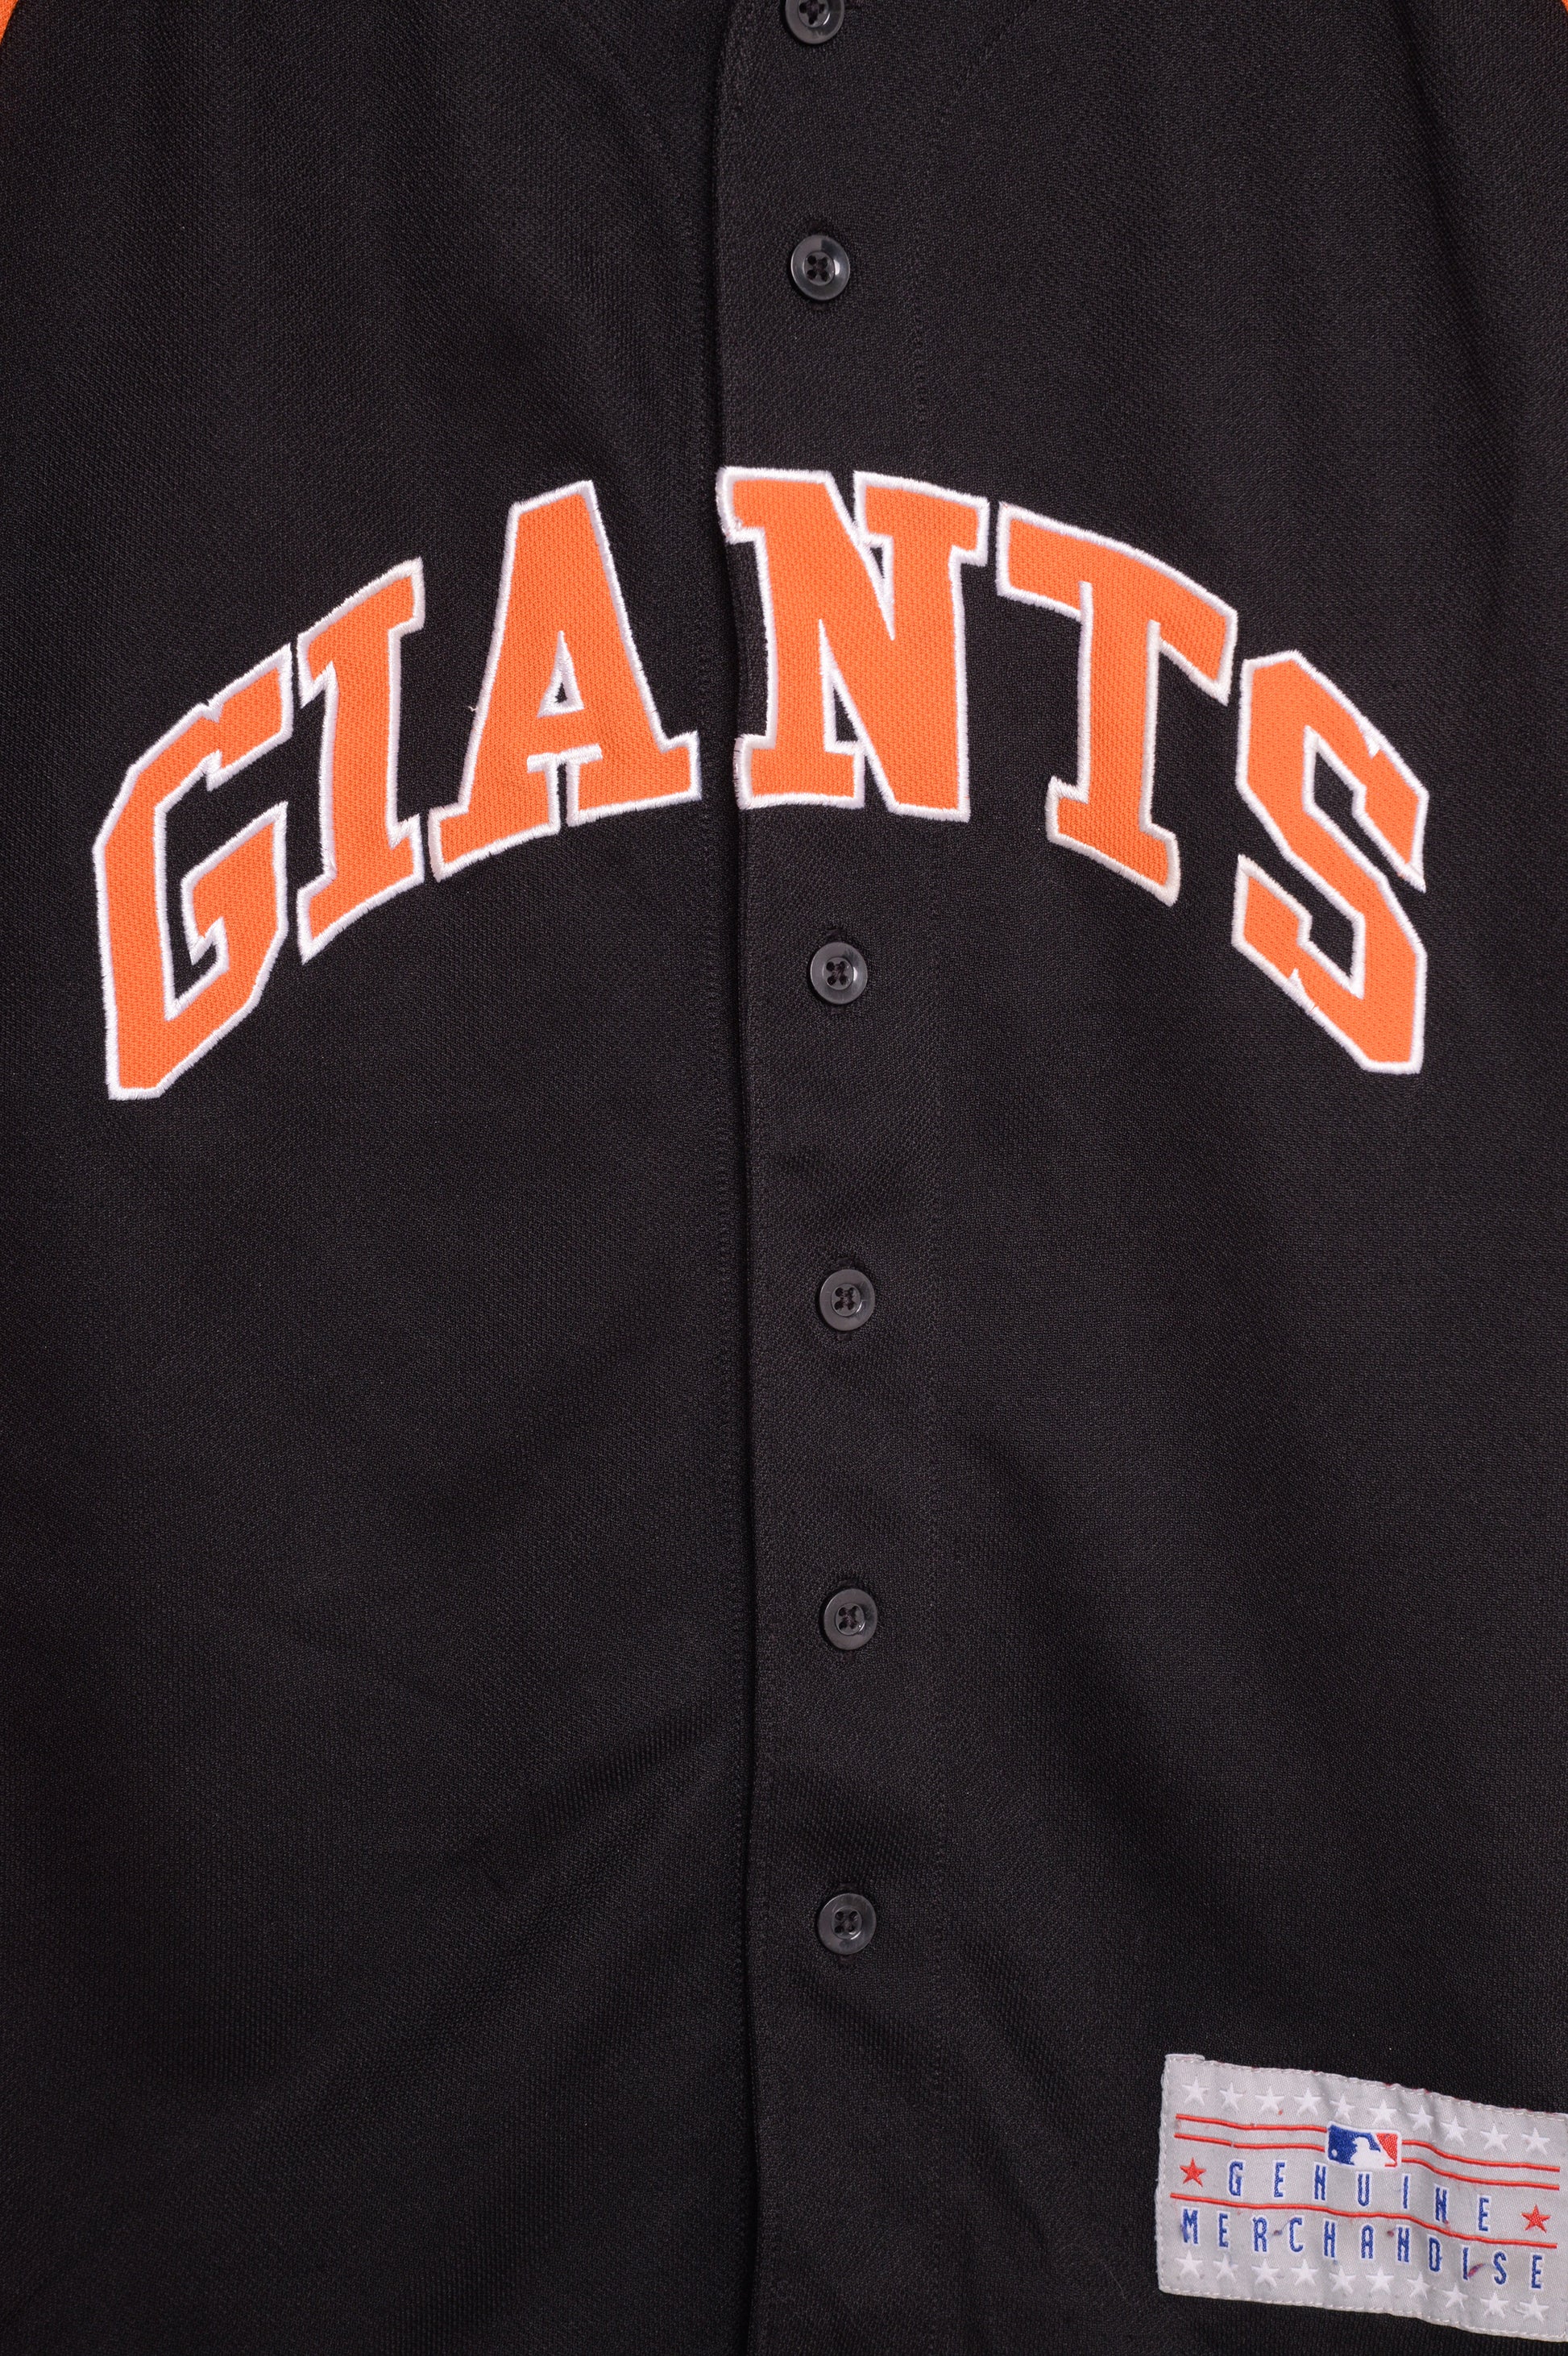 sf giants baseball jersey